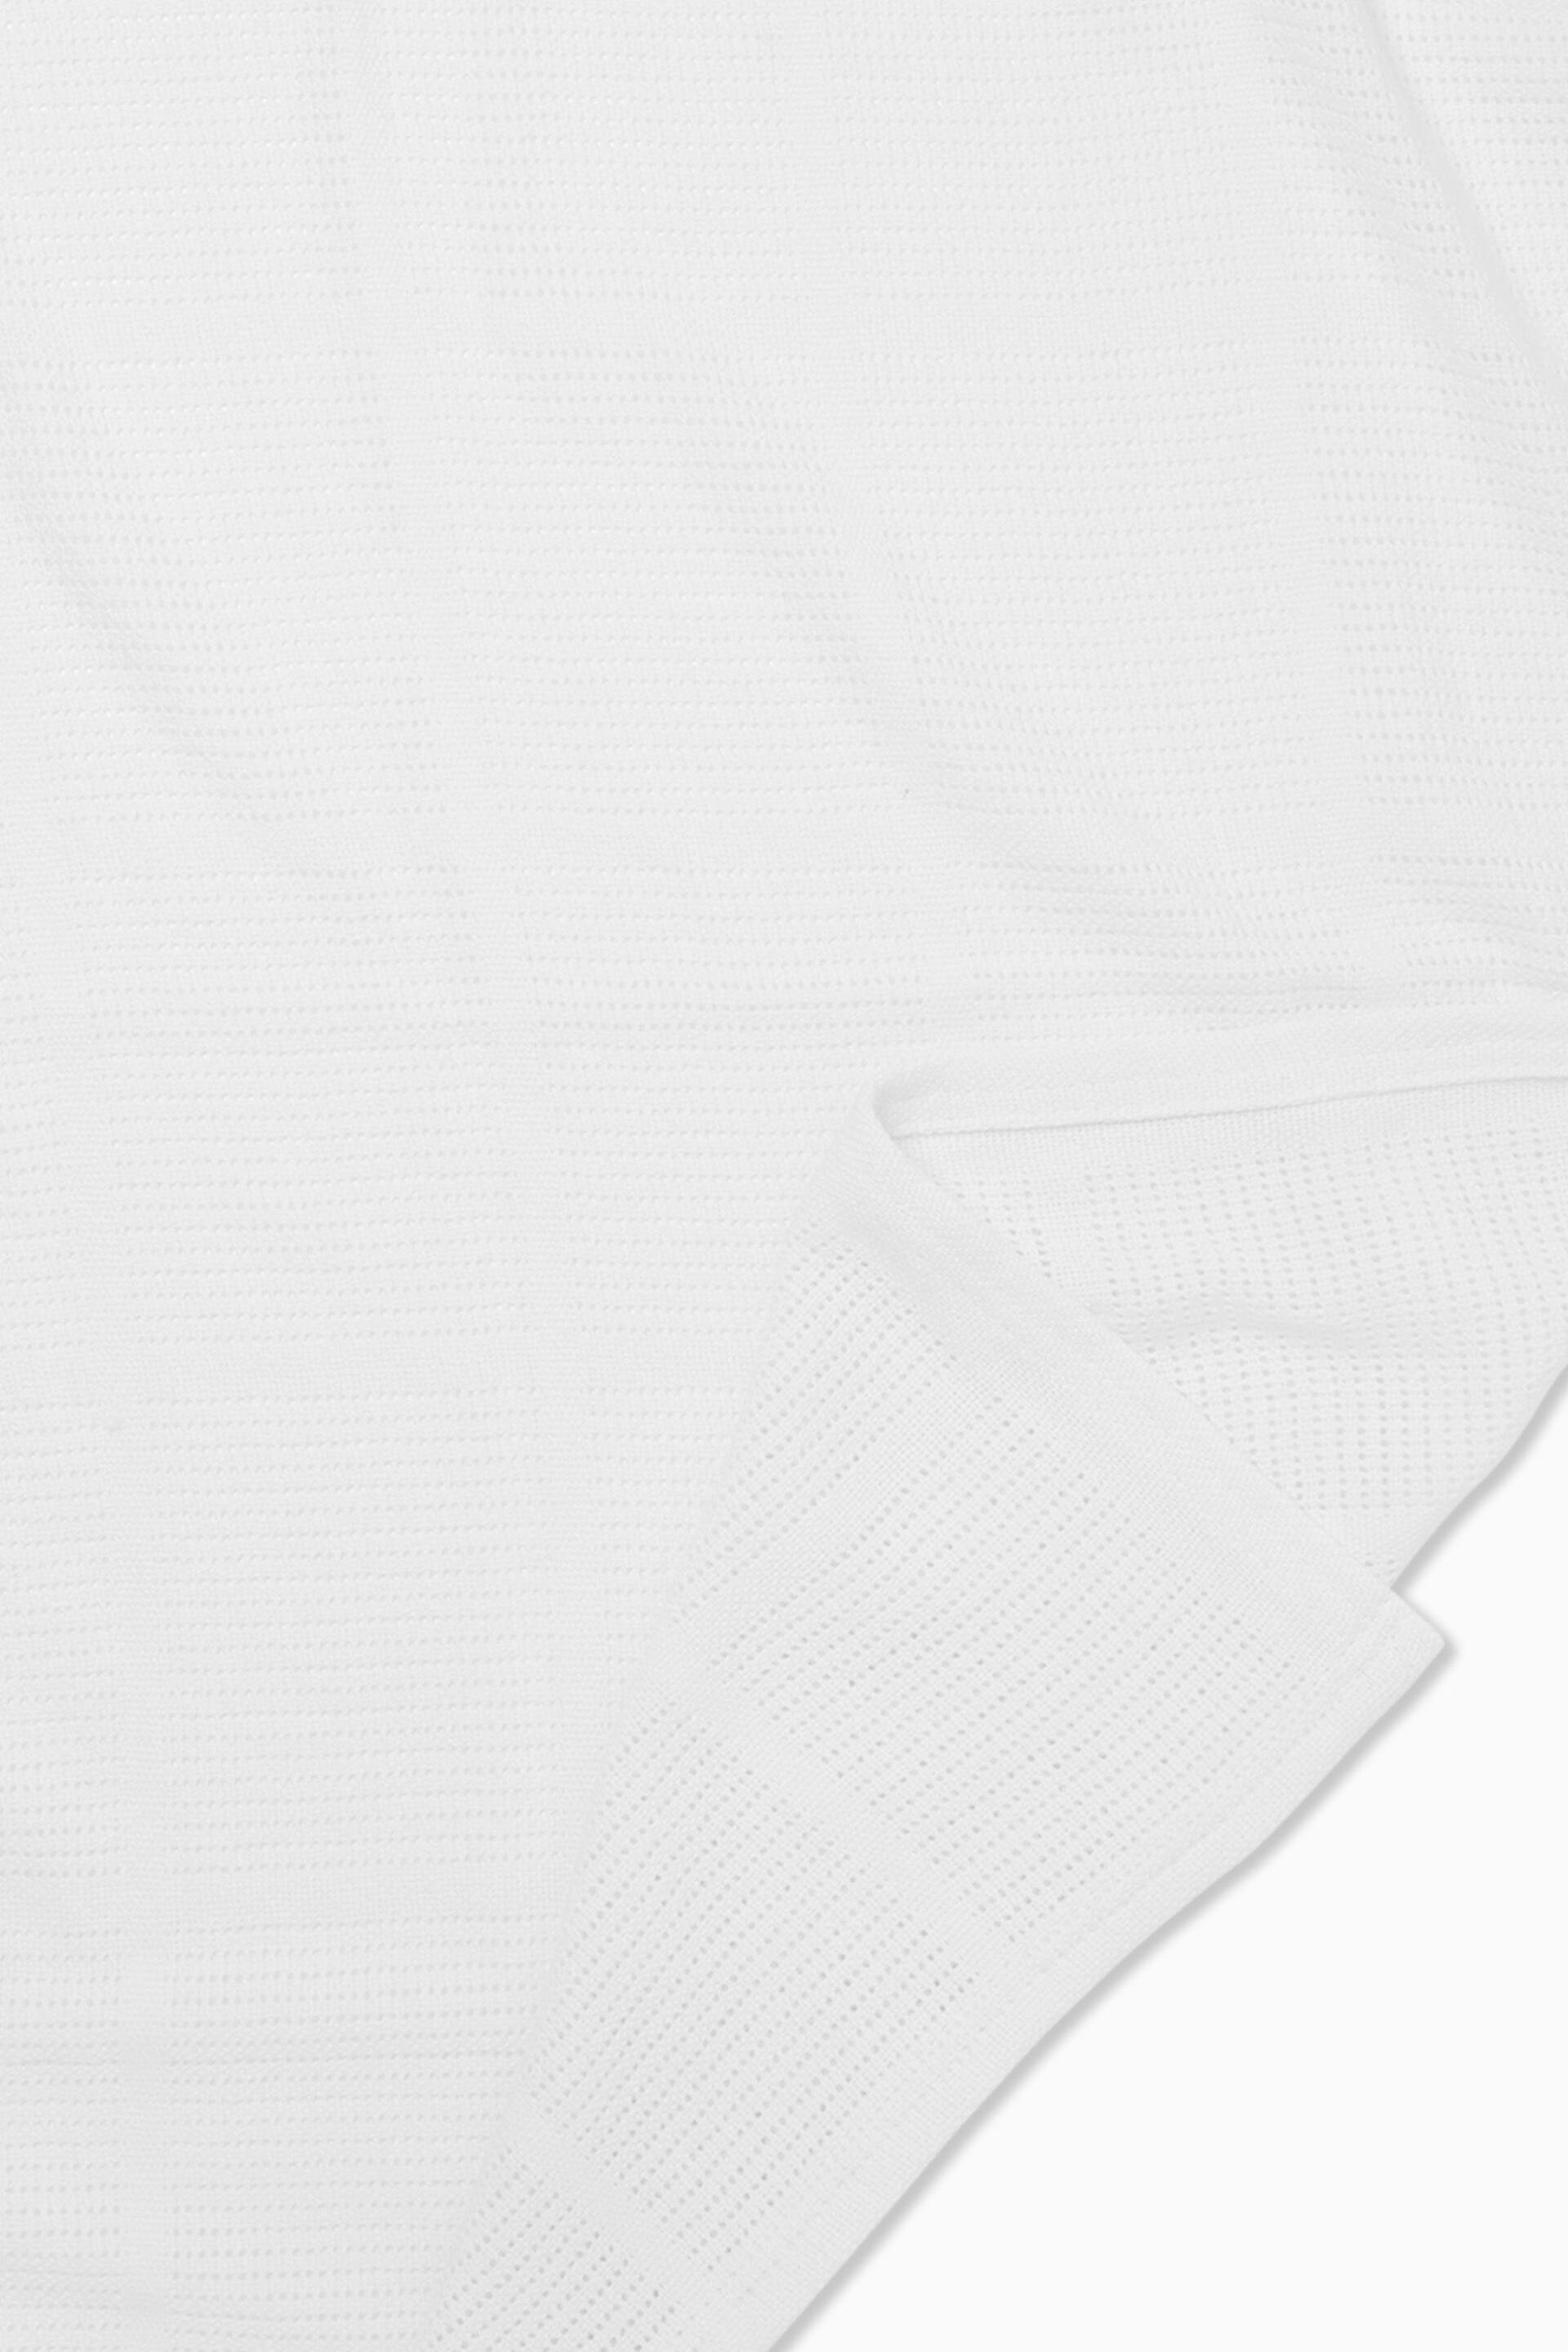 MORI White Soft Cotton & Bamboo Cellular Baby Blanket - Image 3 of 4